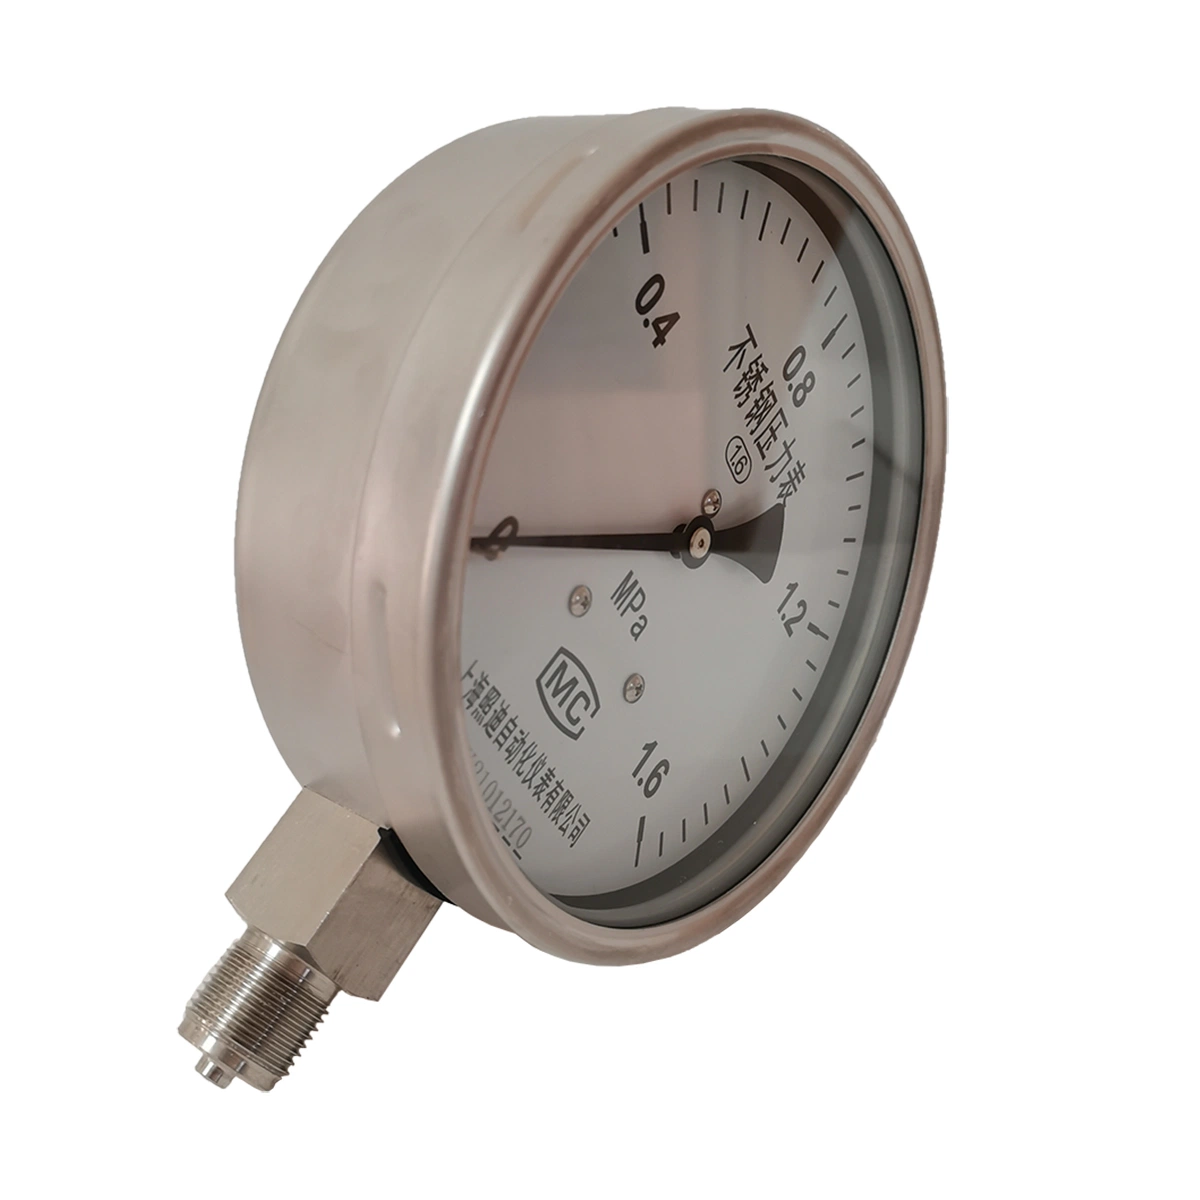 2.5 Inches Manometer Shock Proof Liquid Filled Stainless Steel Pressure Gauge